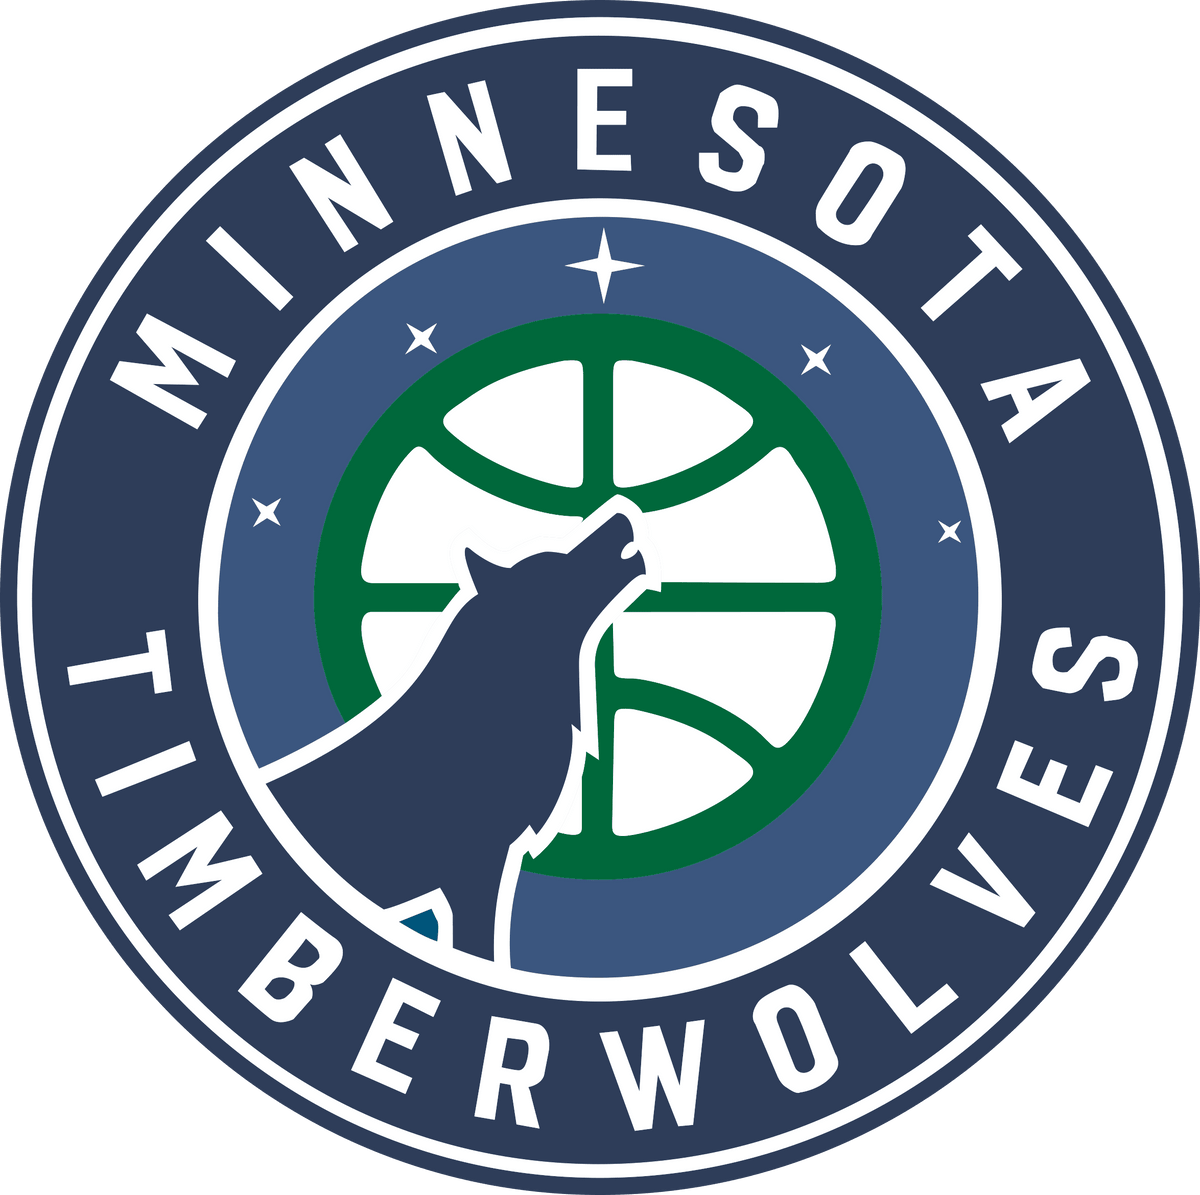 Whole Minnesota Timberwolves Products